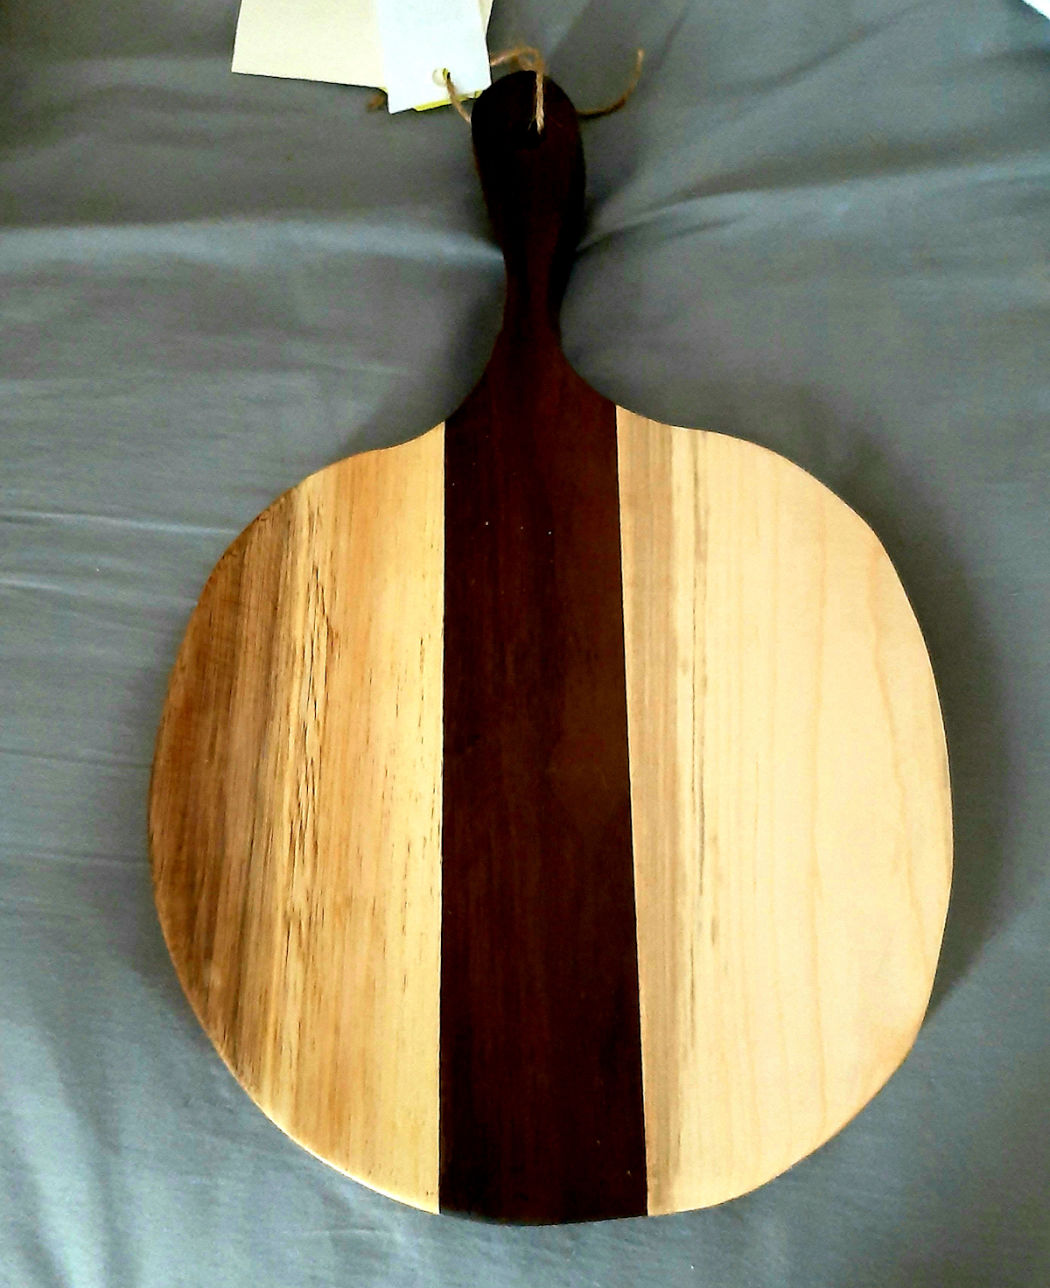 The Banjo Cutting Board